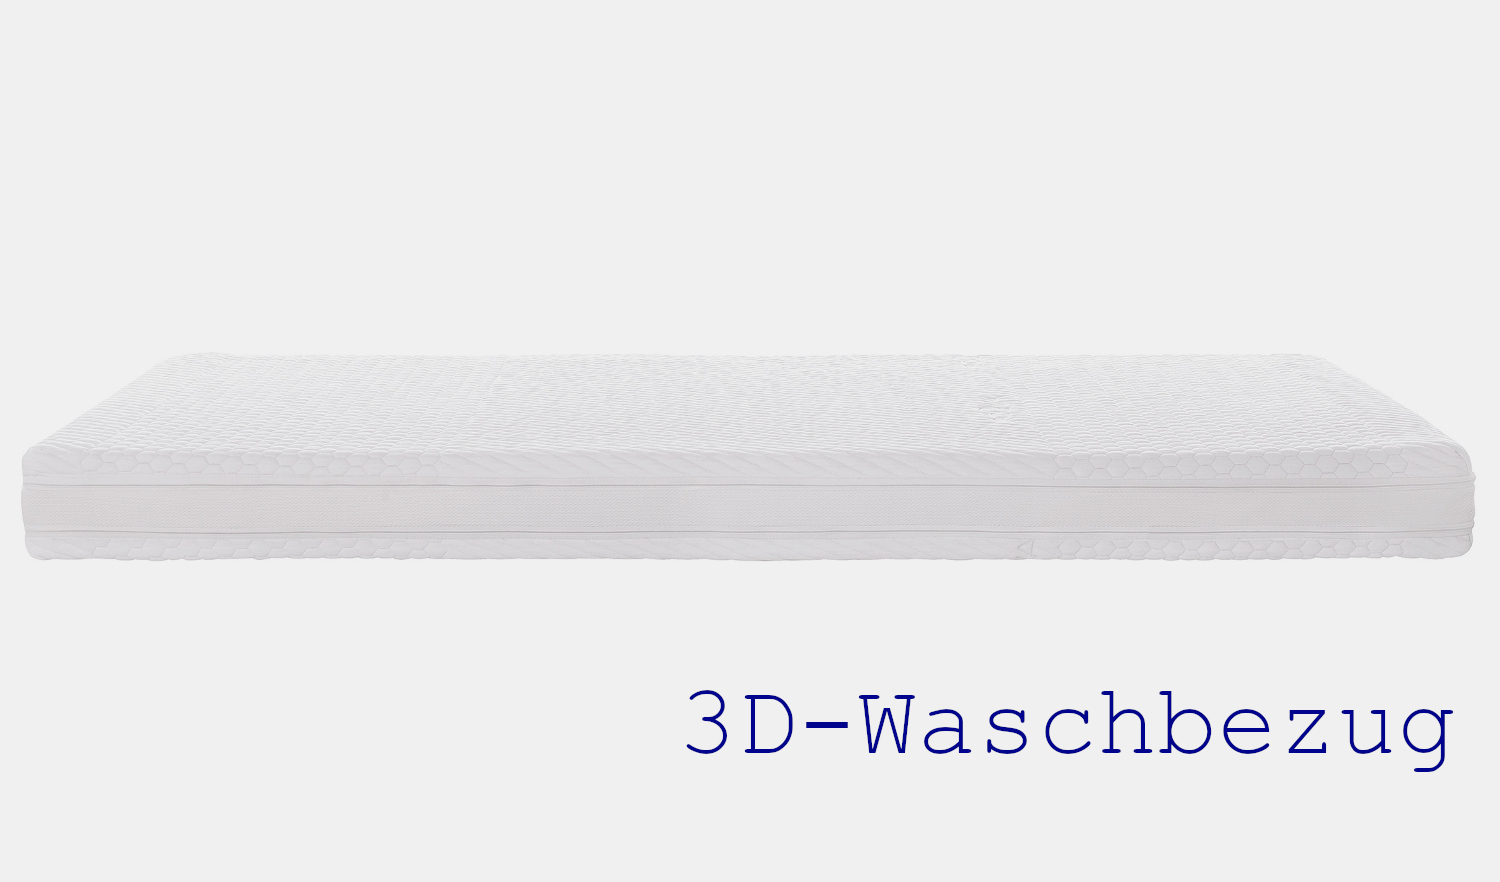 Röwa Kaltschaum Matratze - Ecco2 Sensitive 16 - mit 3D Funktionsbezug, 18cm hoch, made in Germany